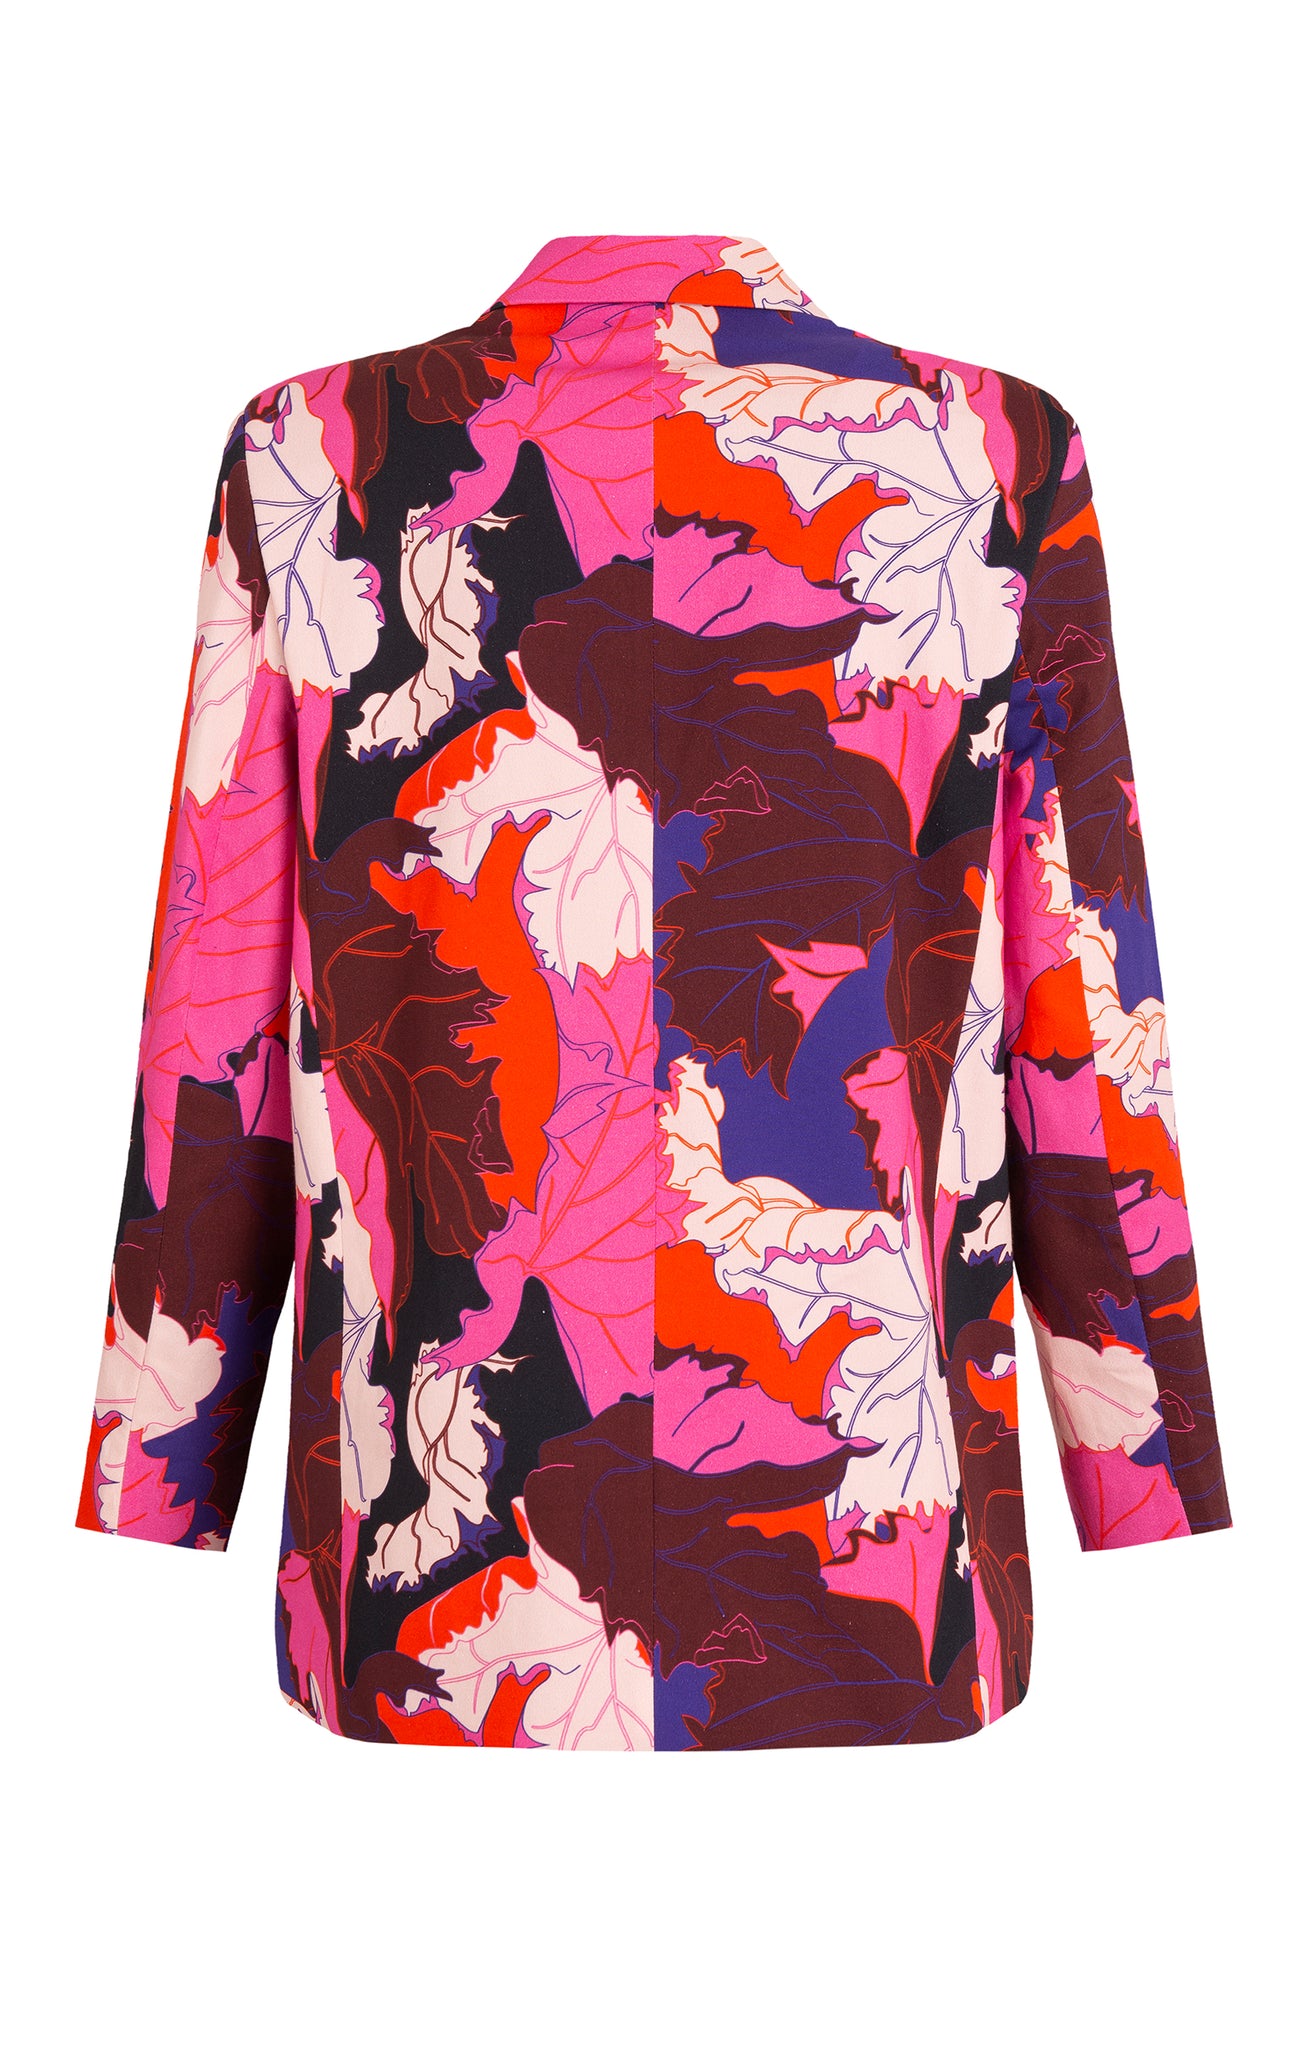 KADARKA oversized jacket 'pink leaves'